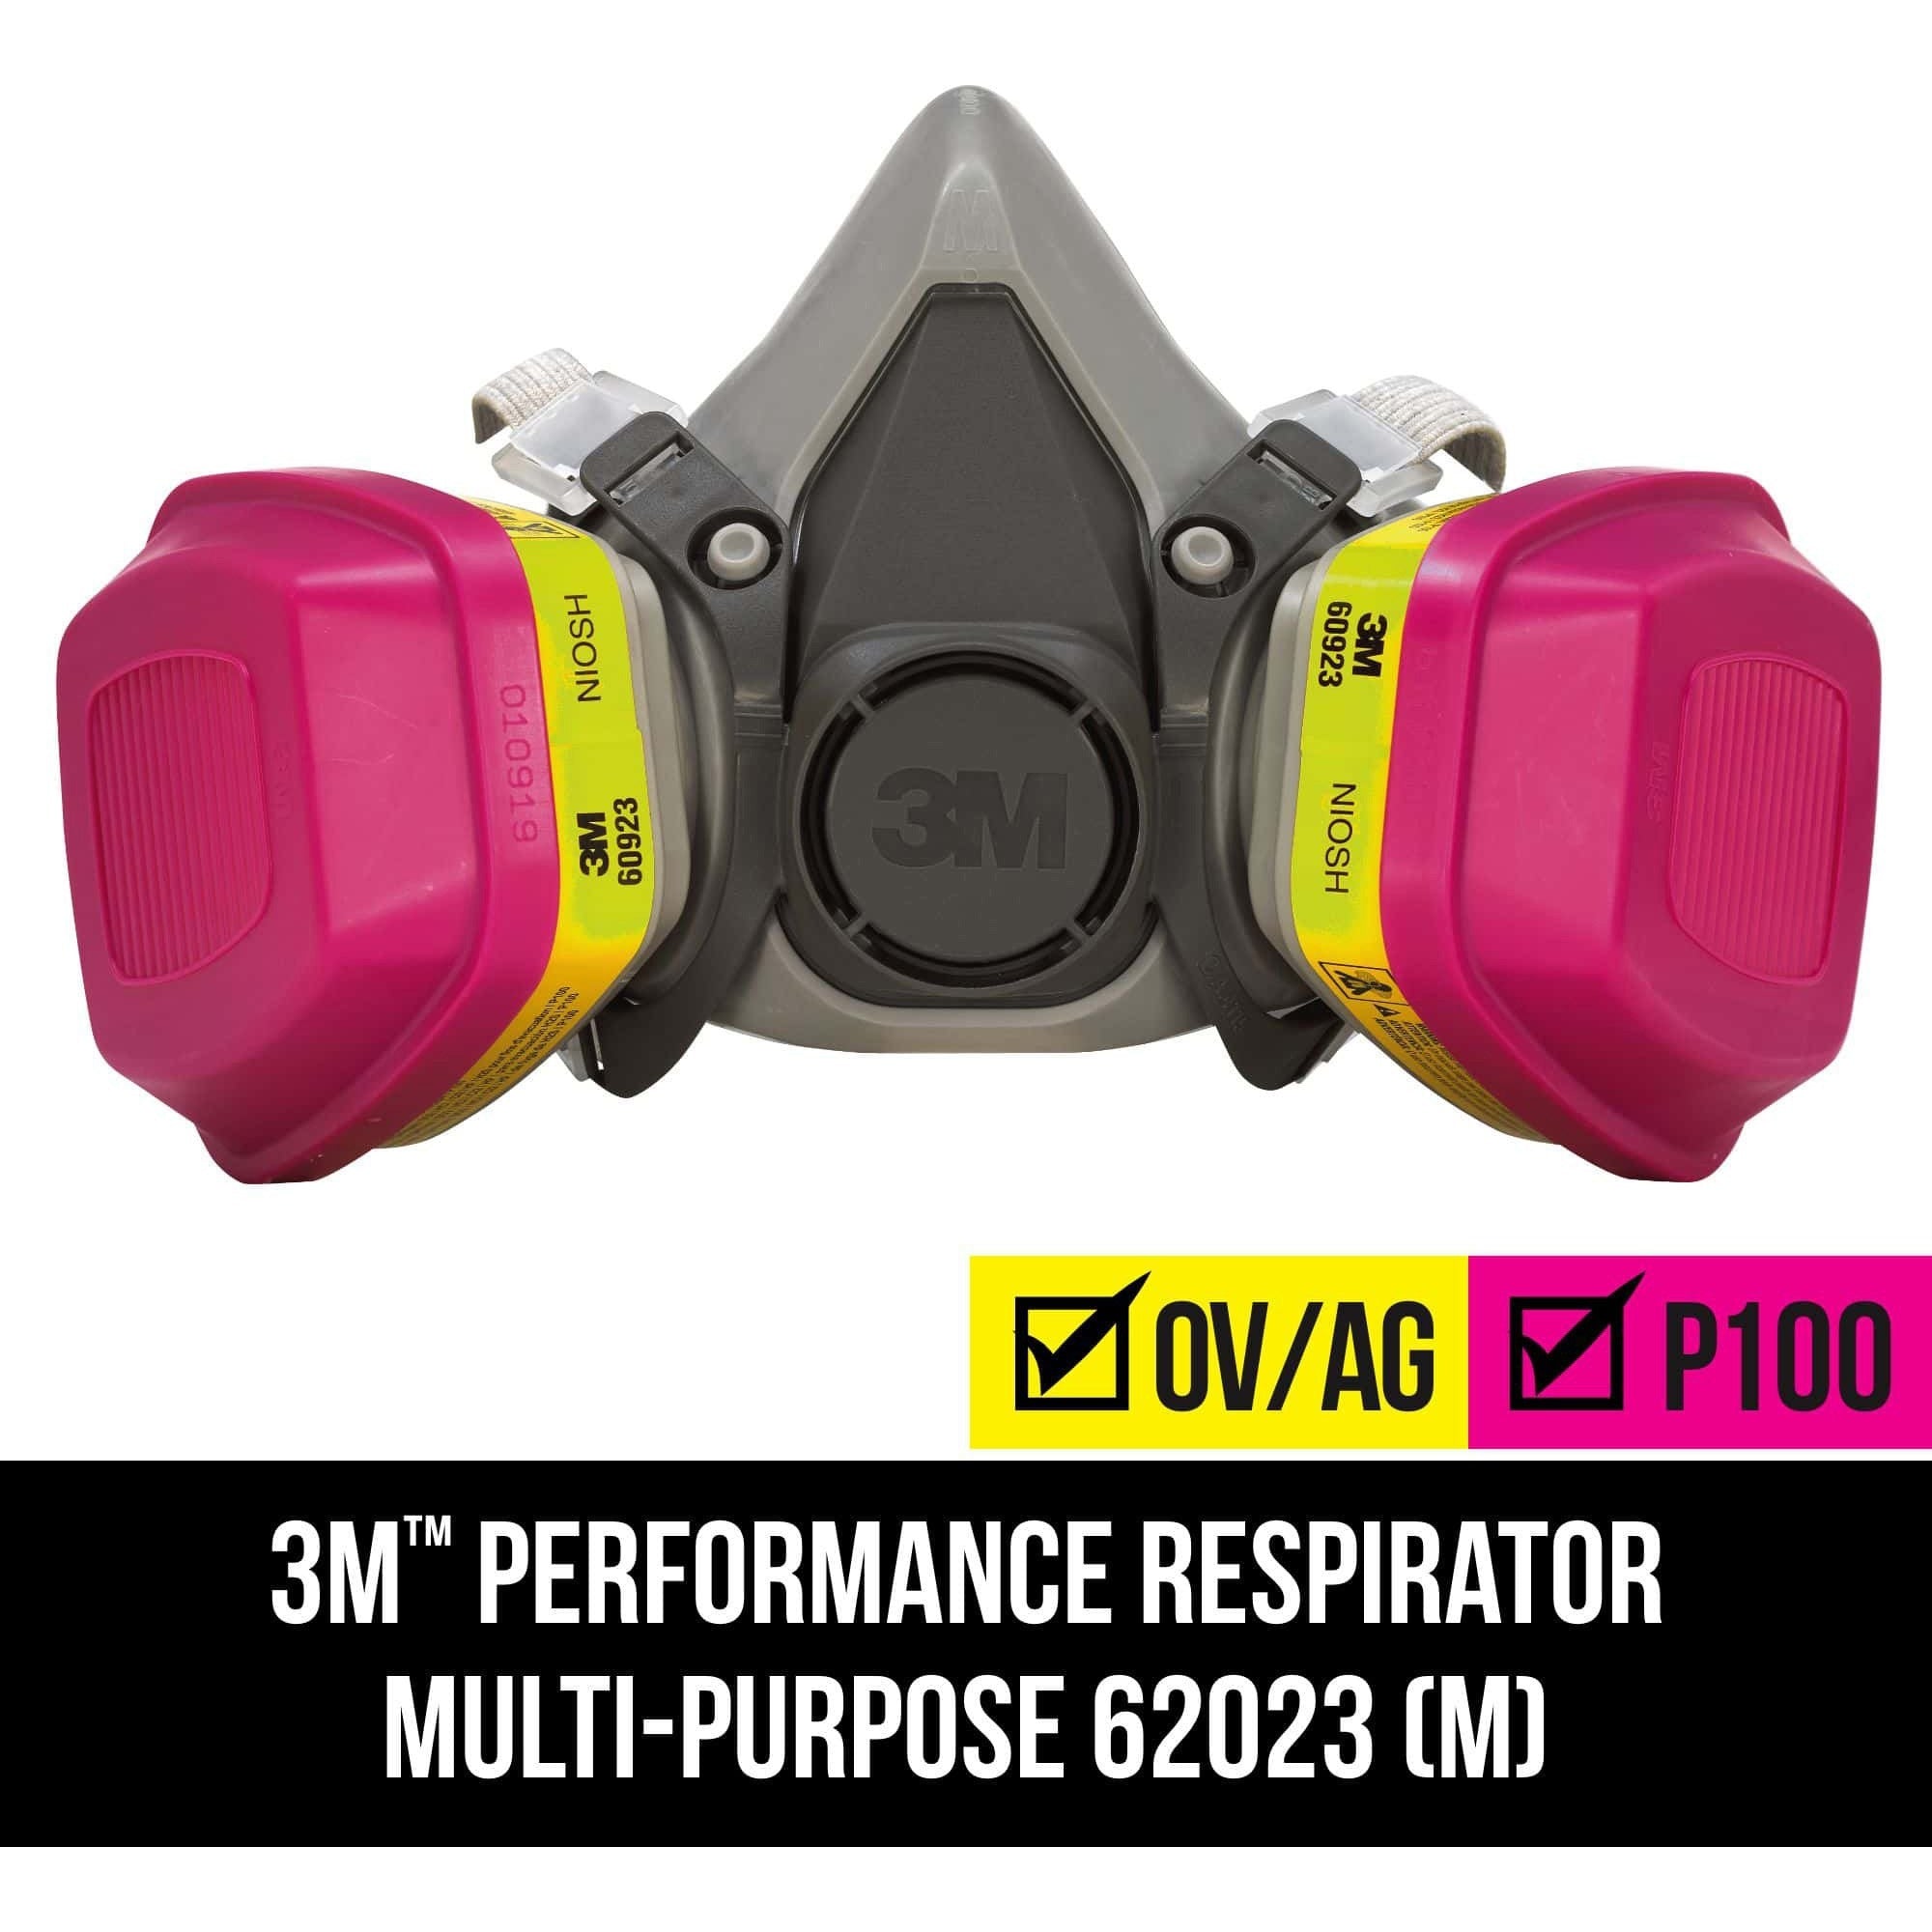 Tekk Protection Multipurpose Respirator - Liquid Protection - Gray - Lightweight - 1 Each - 